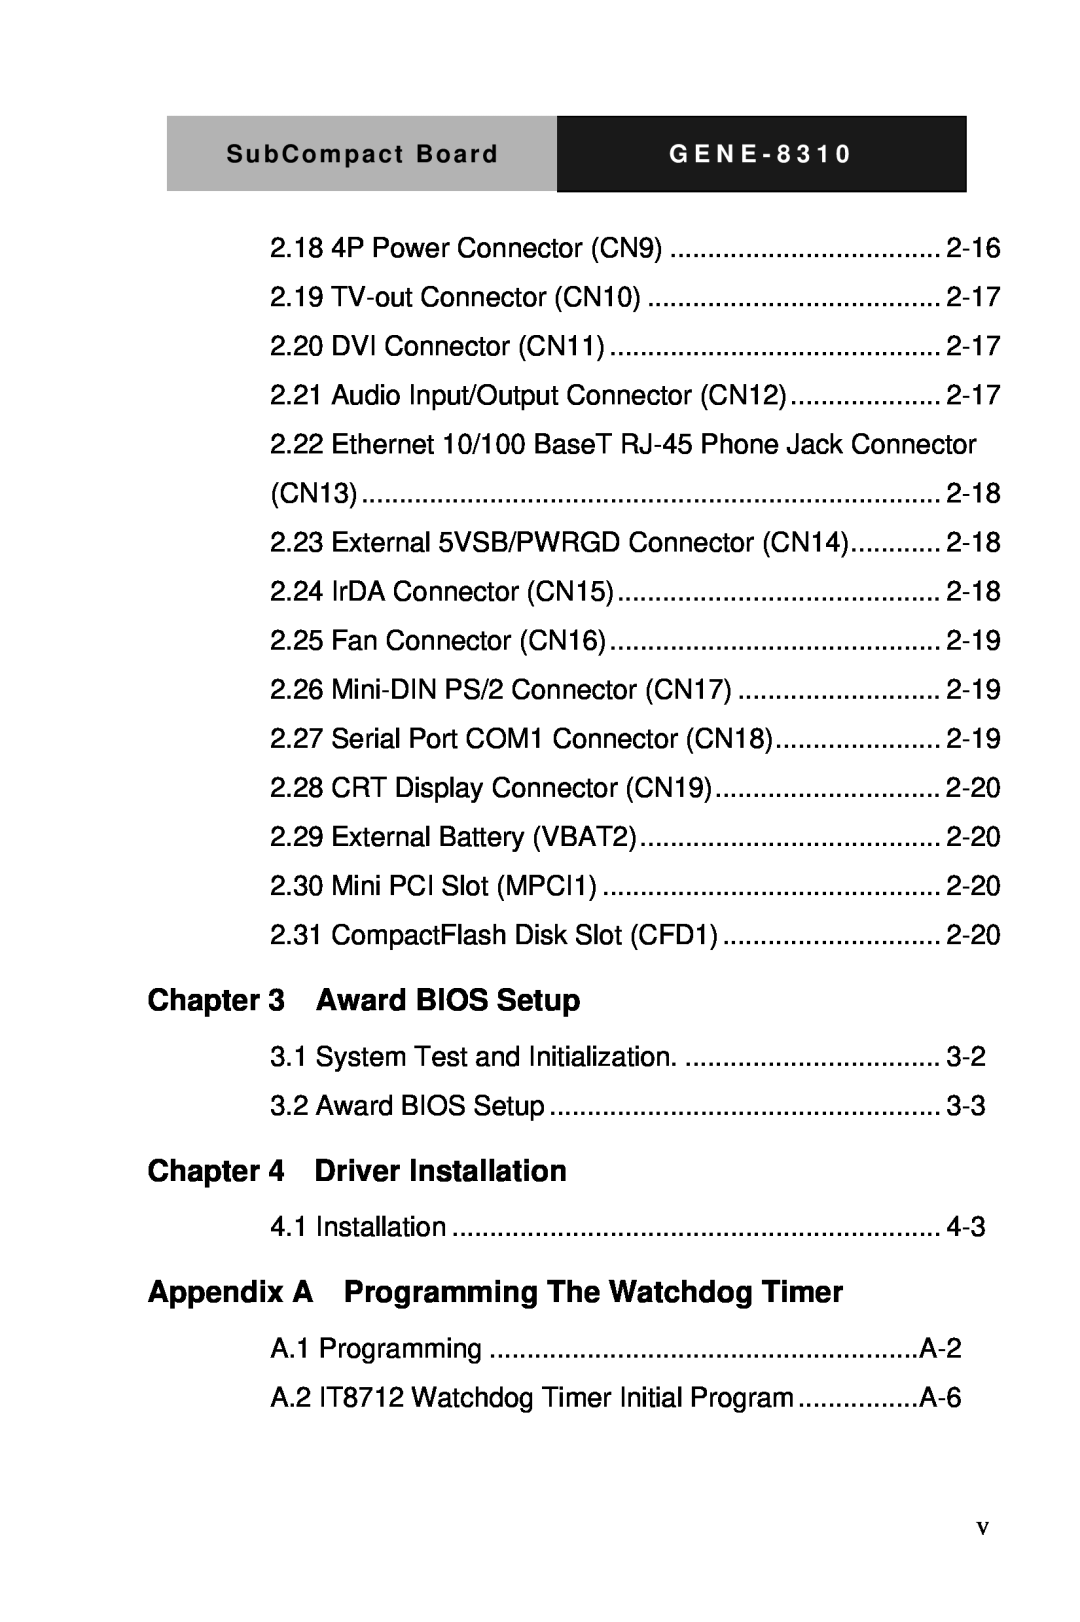 Intel GENE-8310 manual Award BIOS Setup, Driver Installation, Appendix A Programming The Watchdog Timer 